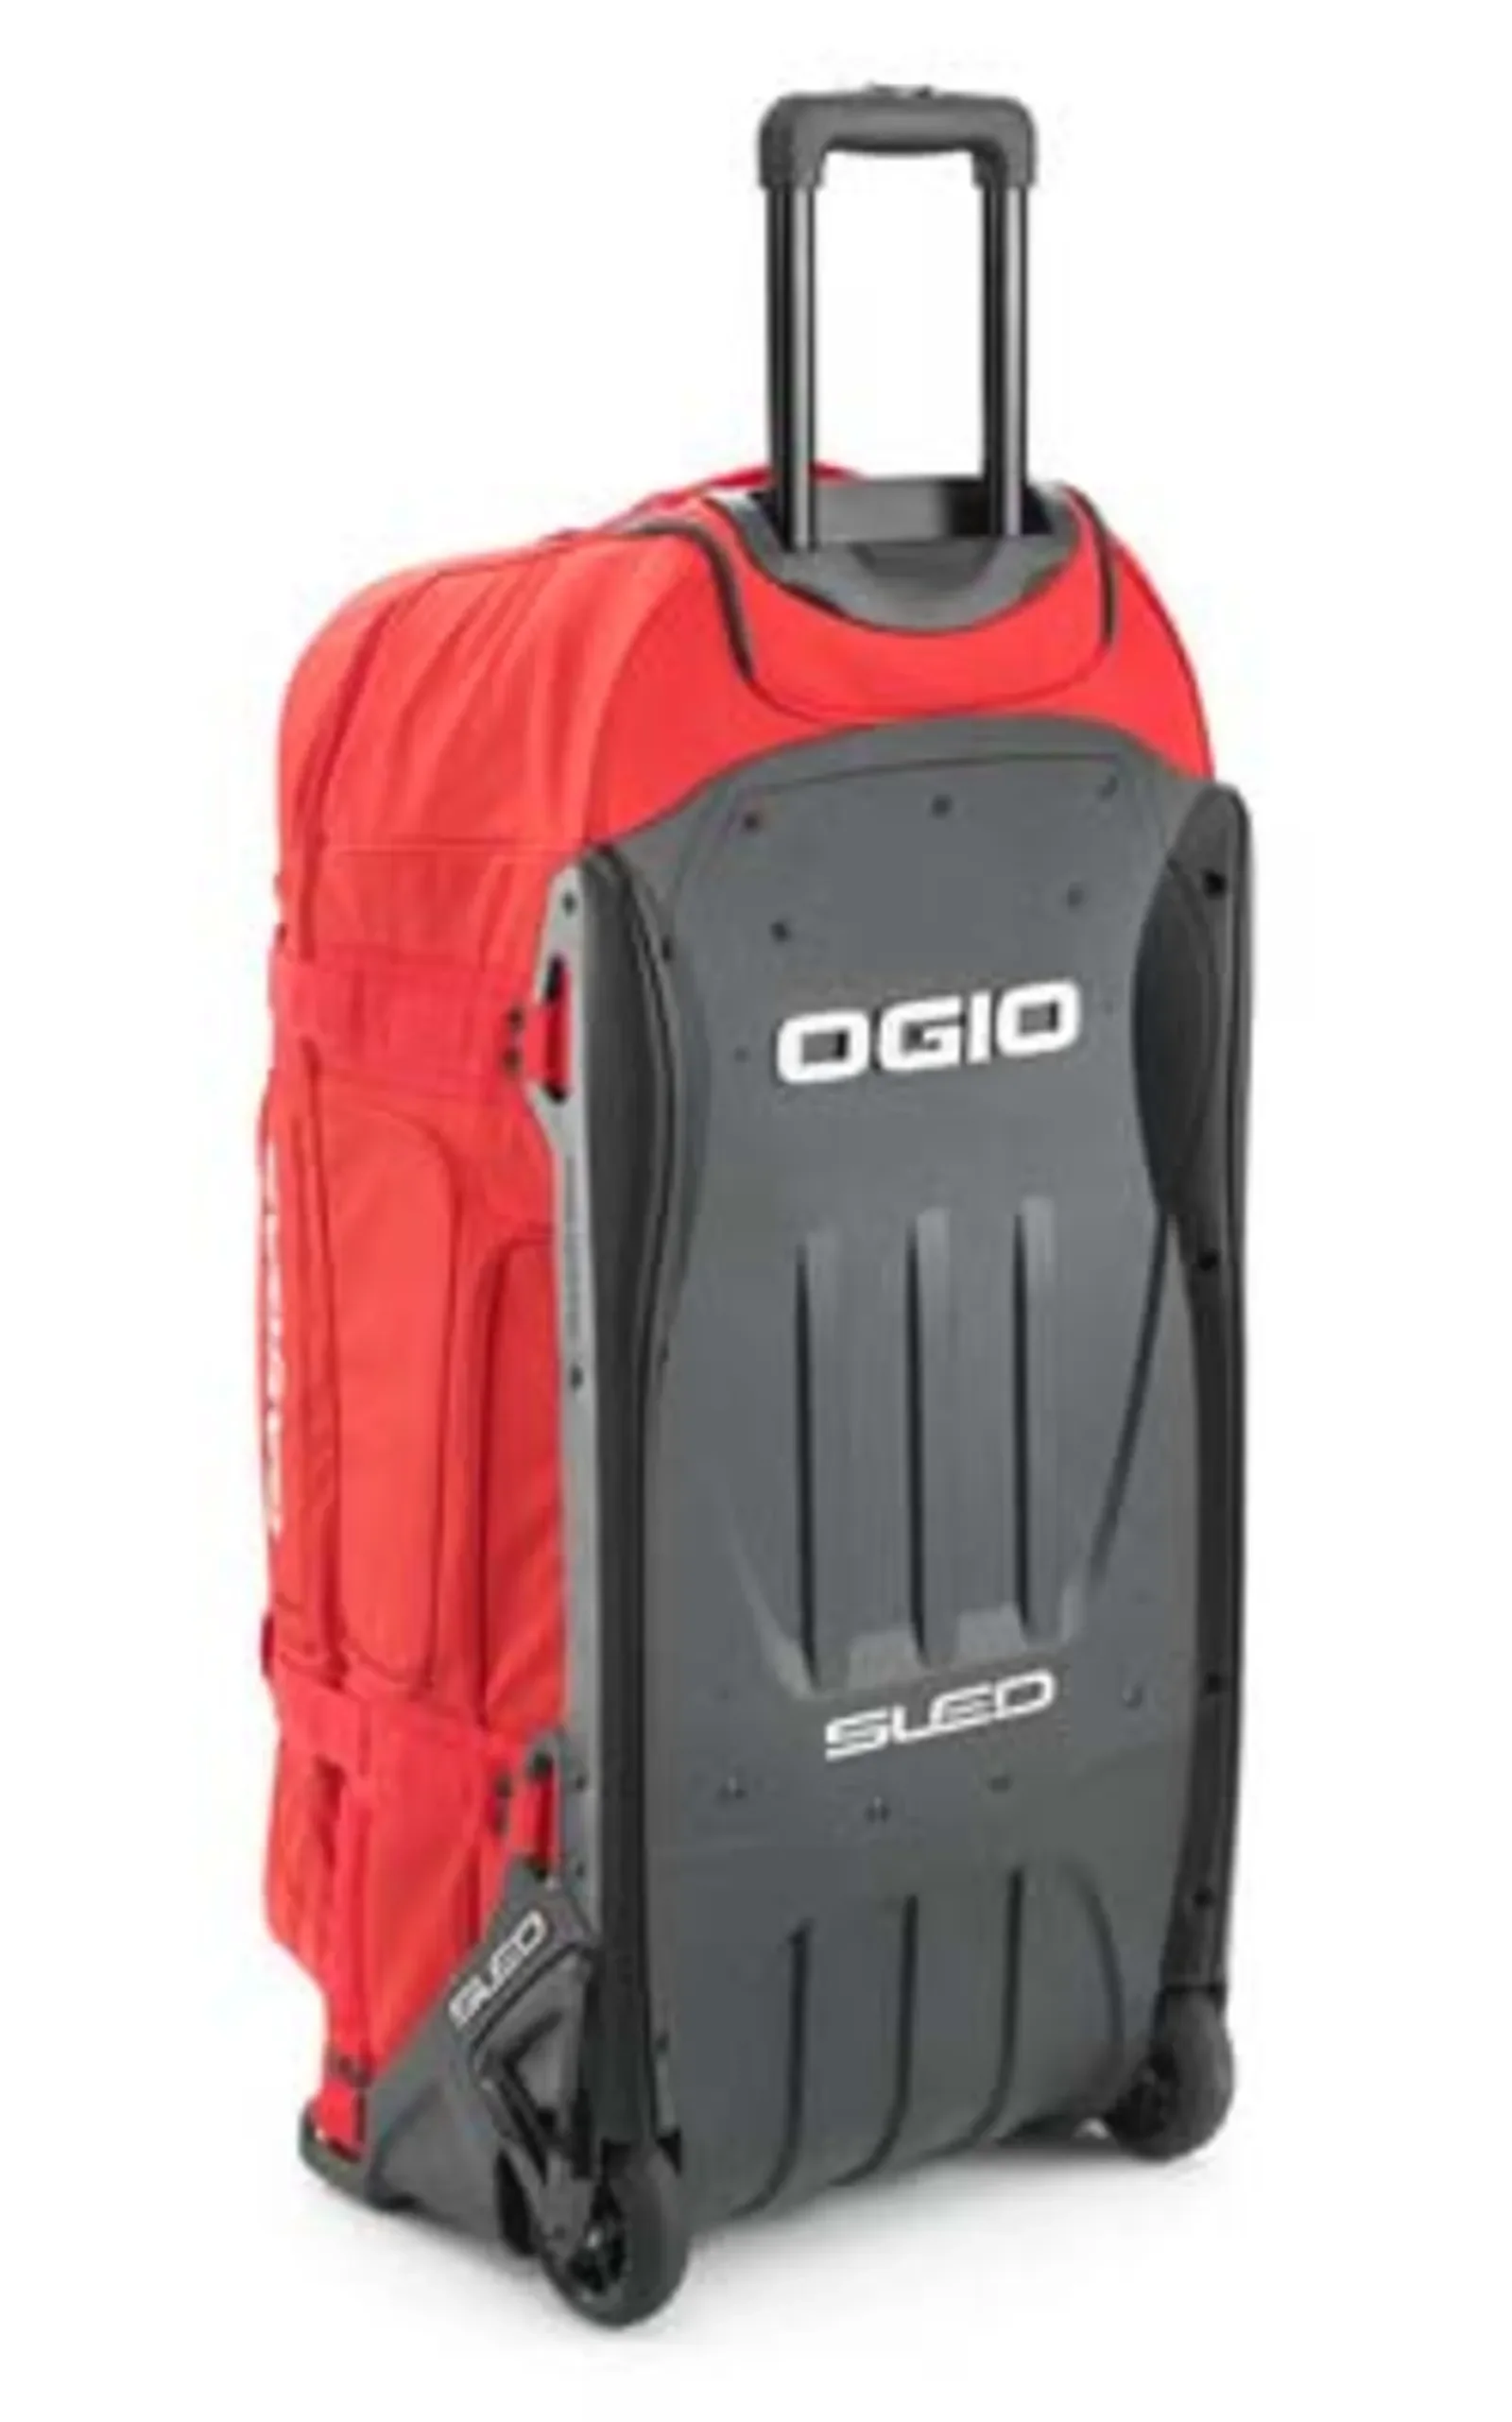 GASGAS OGIO TEAM TRAVEL ROLLER BAG 9800 GENUINE OEM AUTHENTIC 3GG240032200